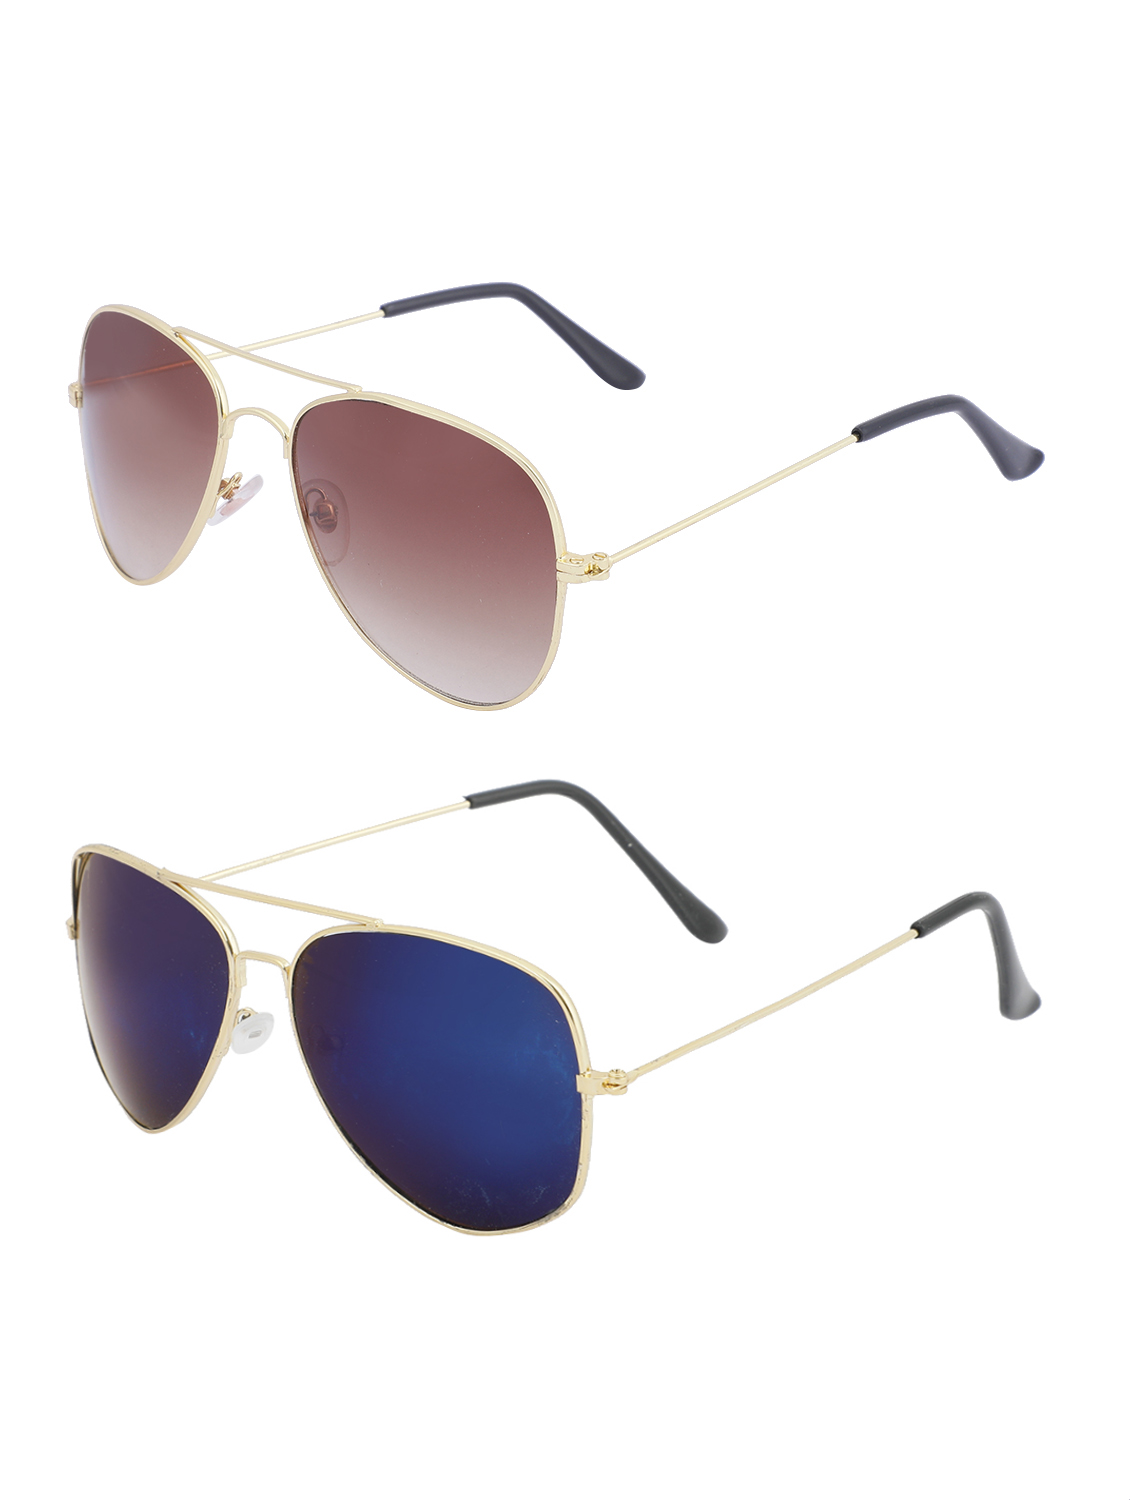 Buy Amora Aviator Sunglasses combo Online @ ₹499 from ShopClues